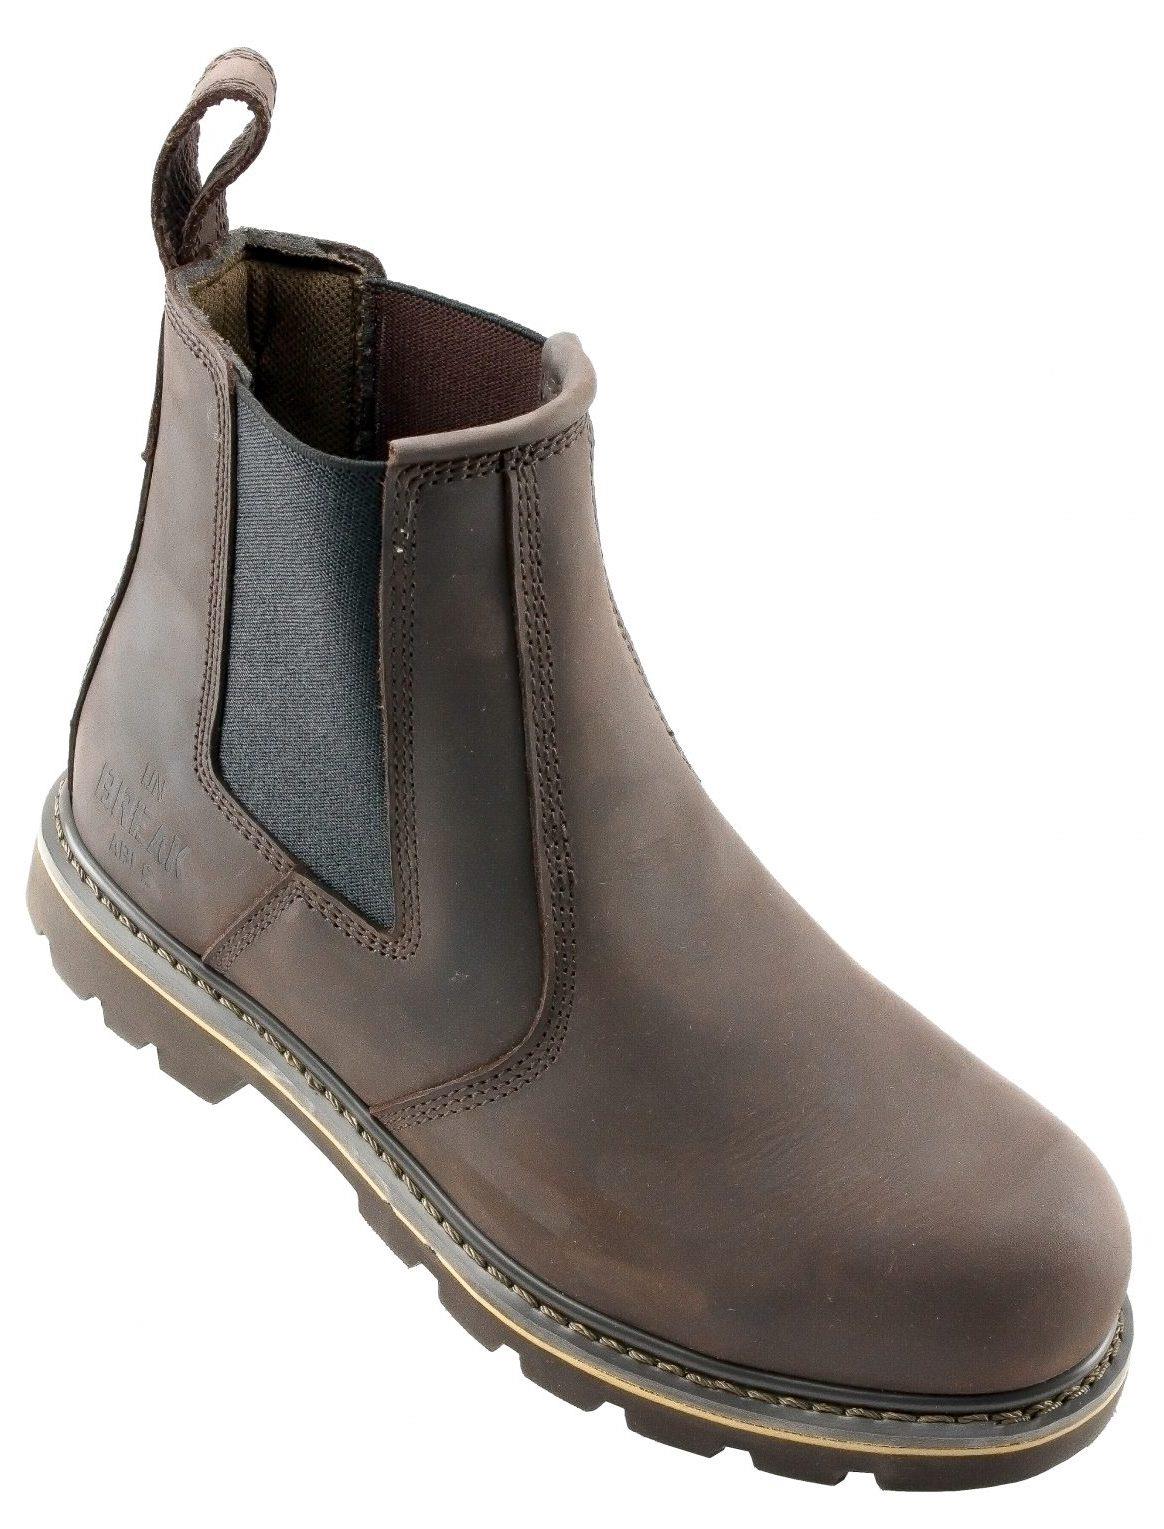 Unbreakable Highland SBP steel toe/midsole brown leather safety dealer boot #U115